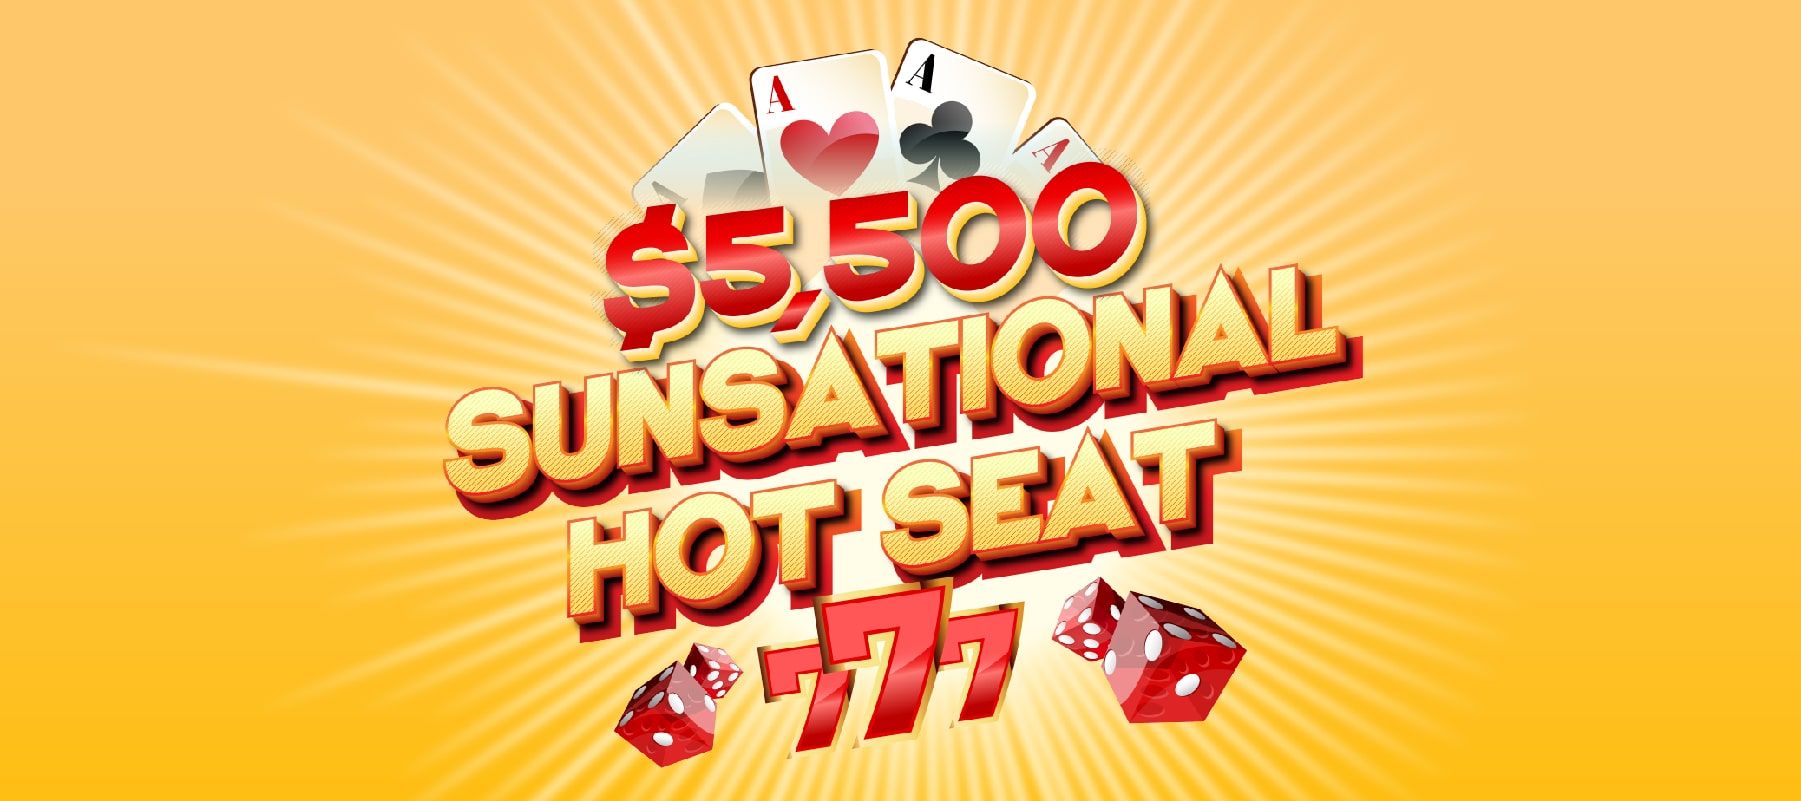 $5,500 Sunsational Hot Seat